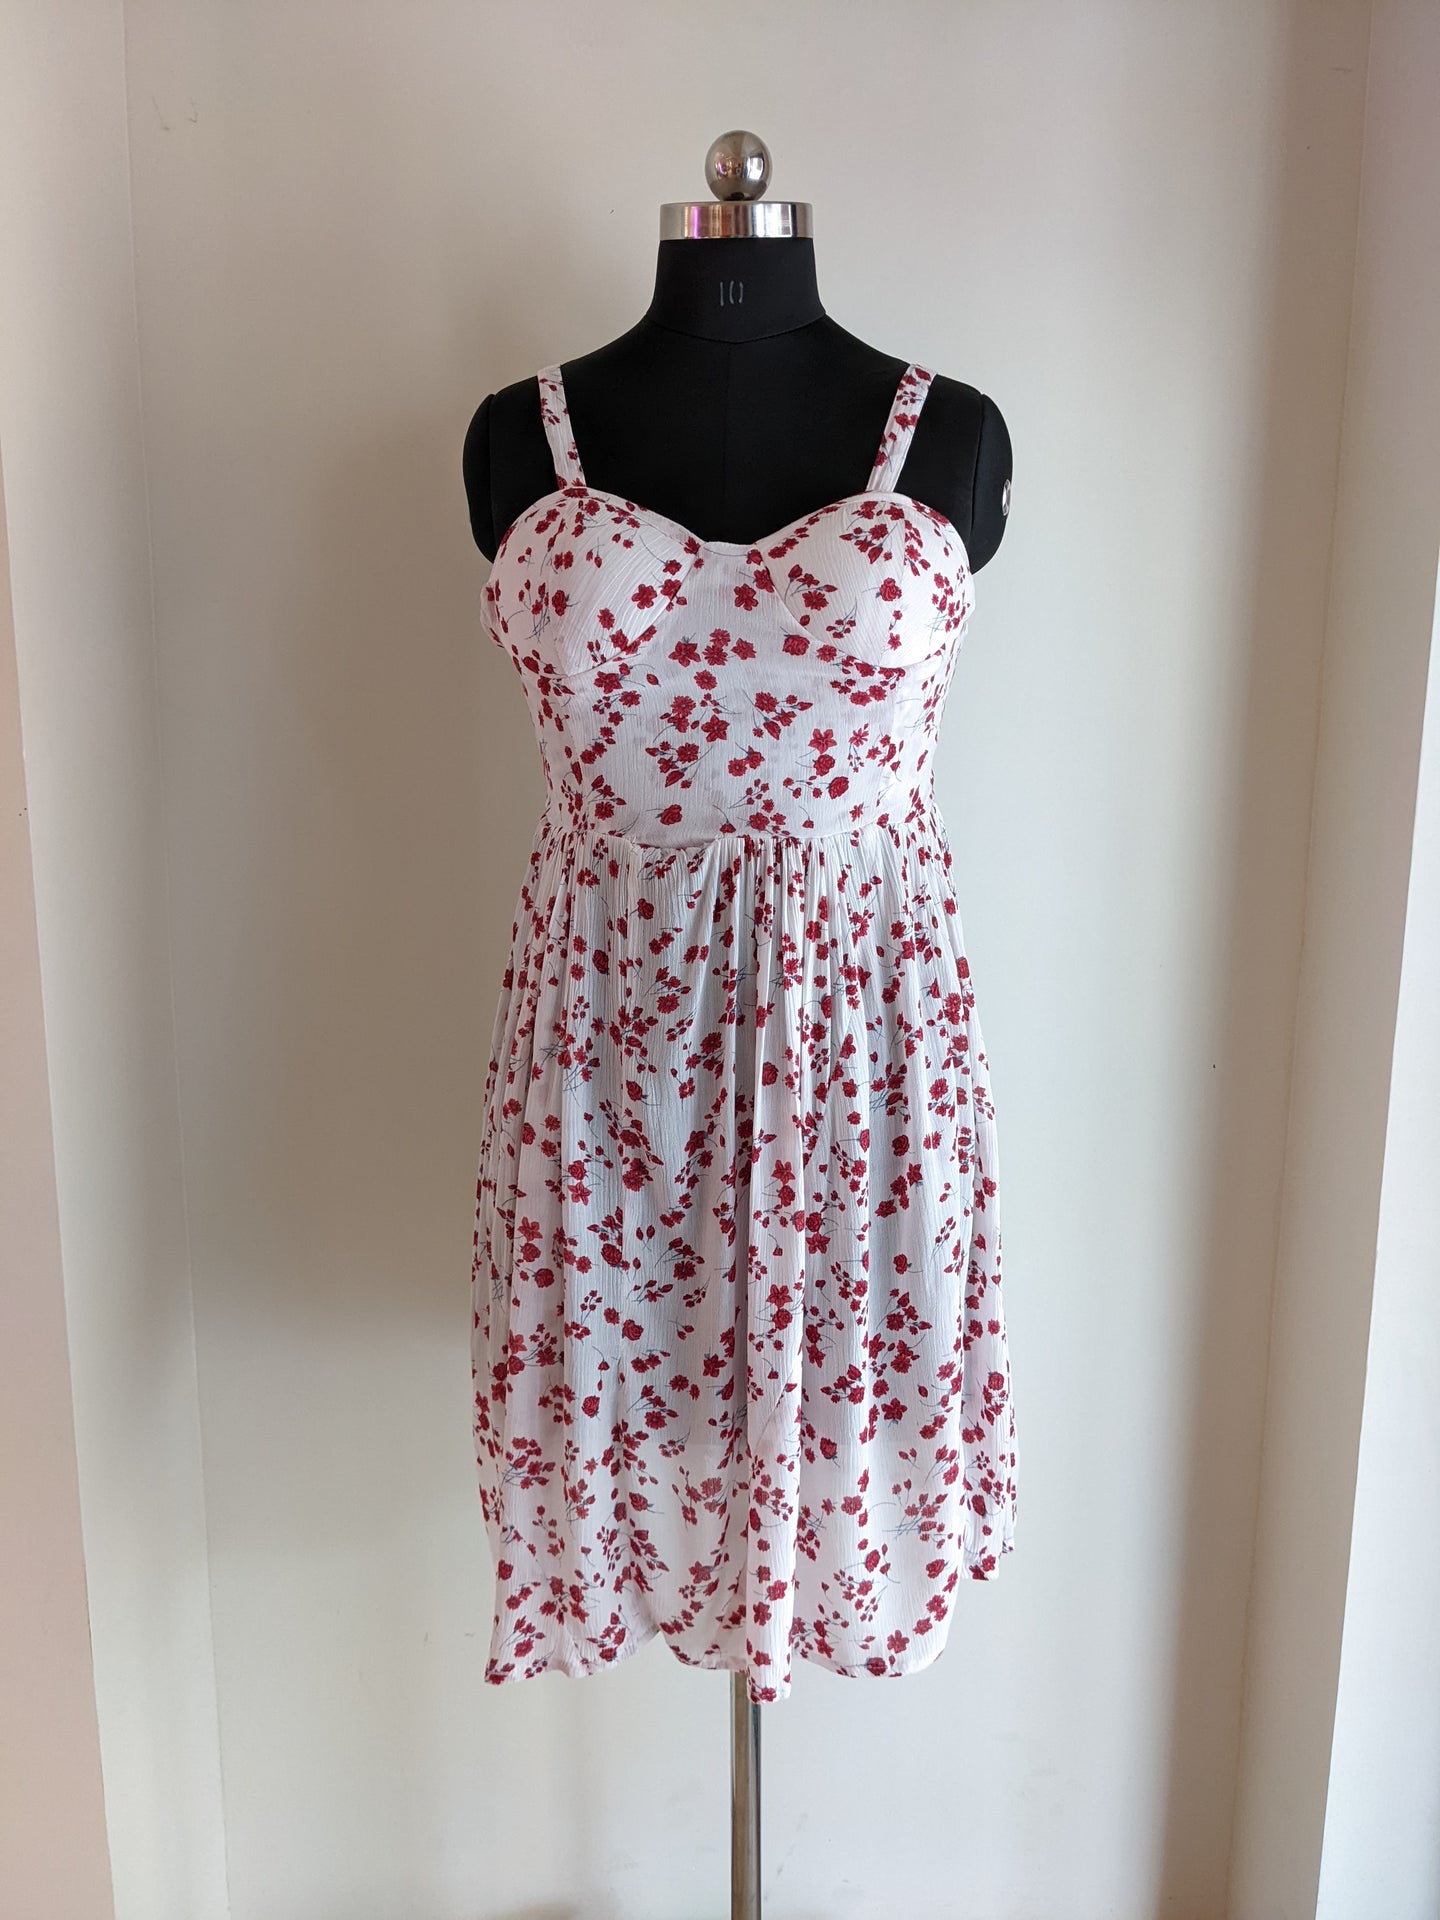 Zara Floral Print Short Dress